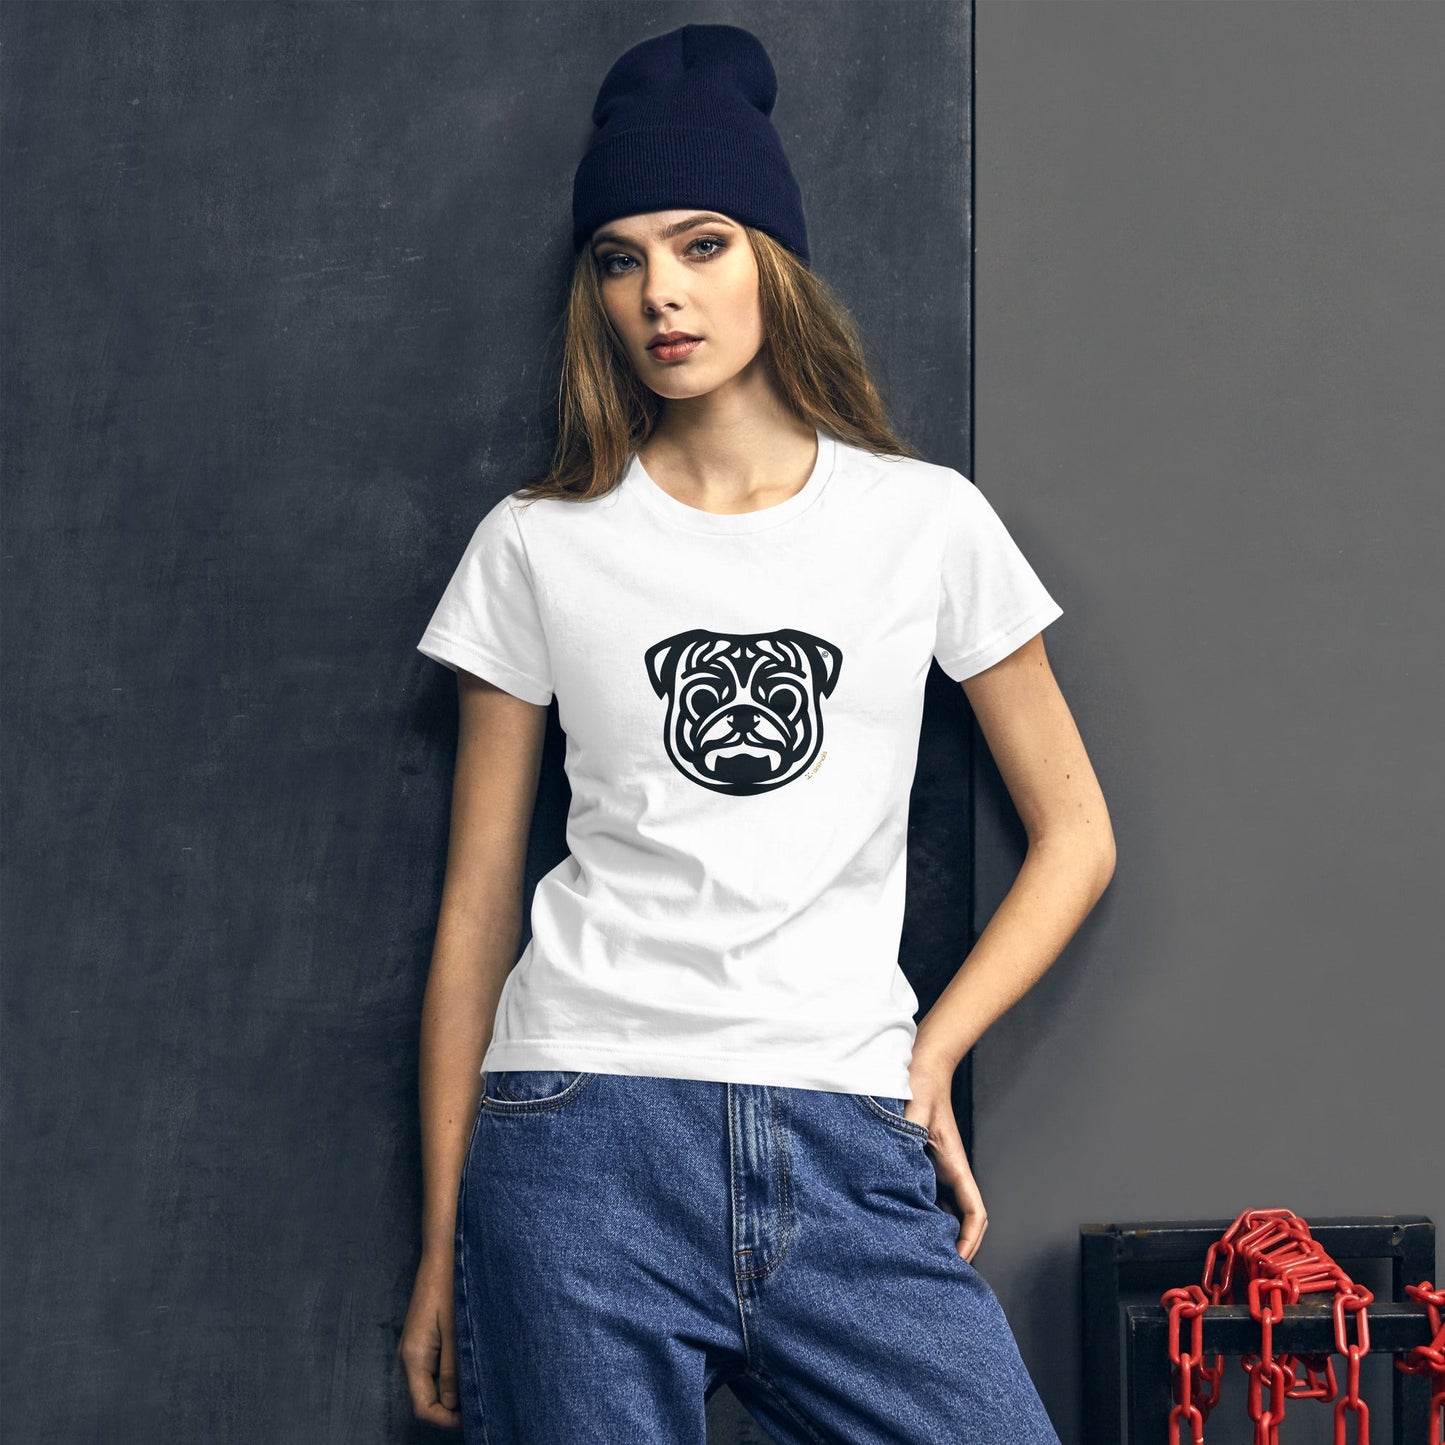 Camiseta feminina de manga curta - Pug - Cores Claras i-animals